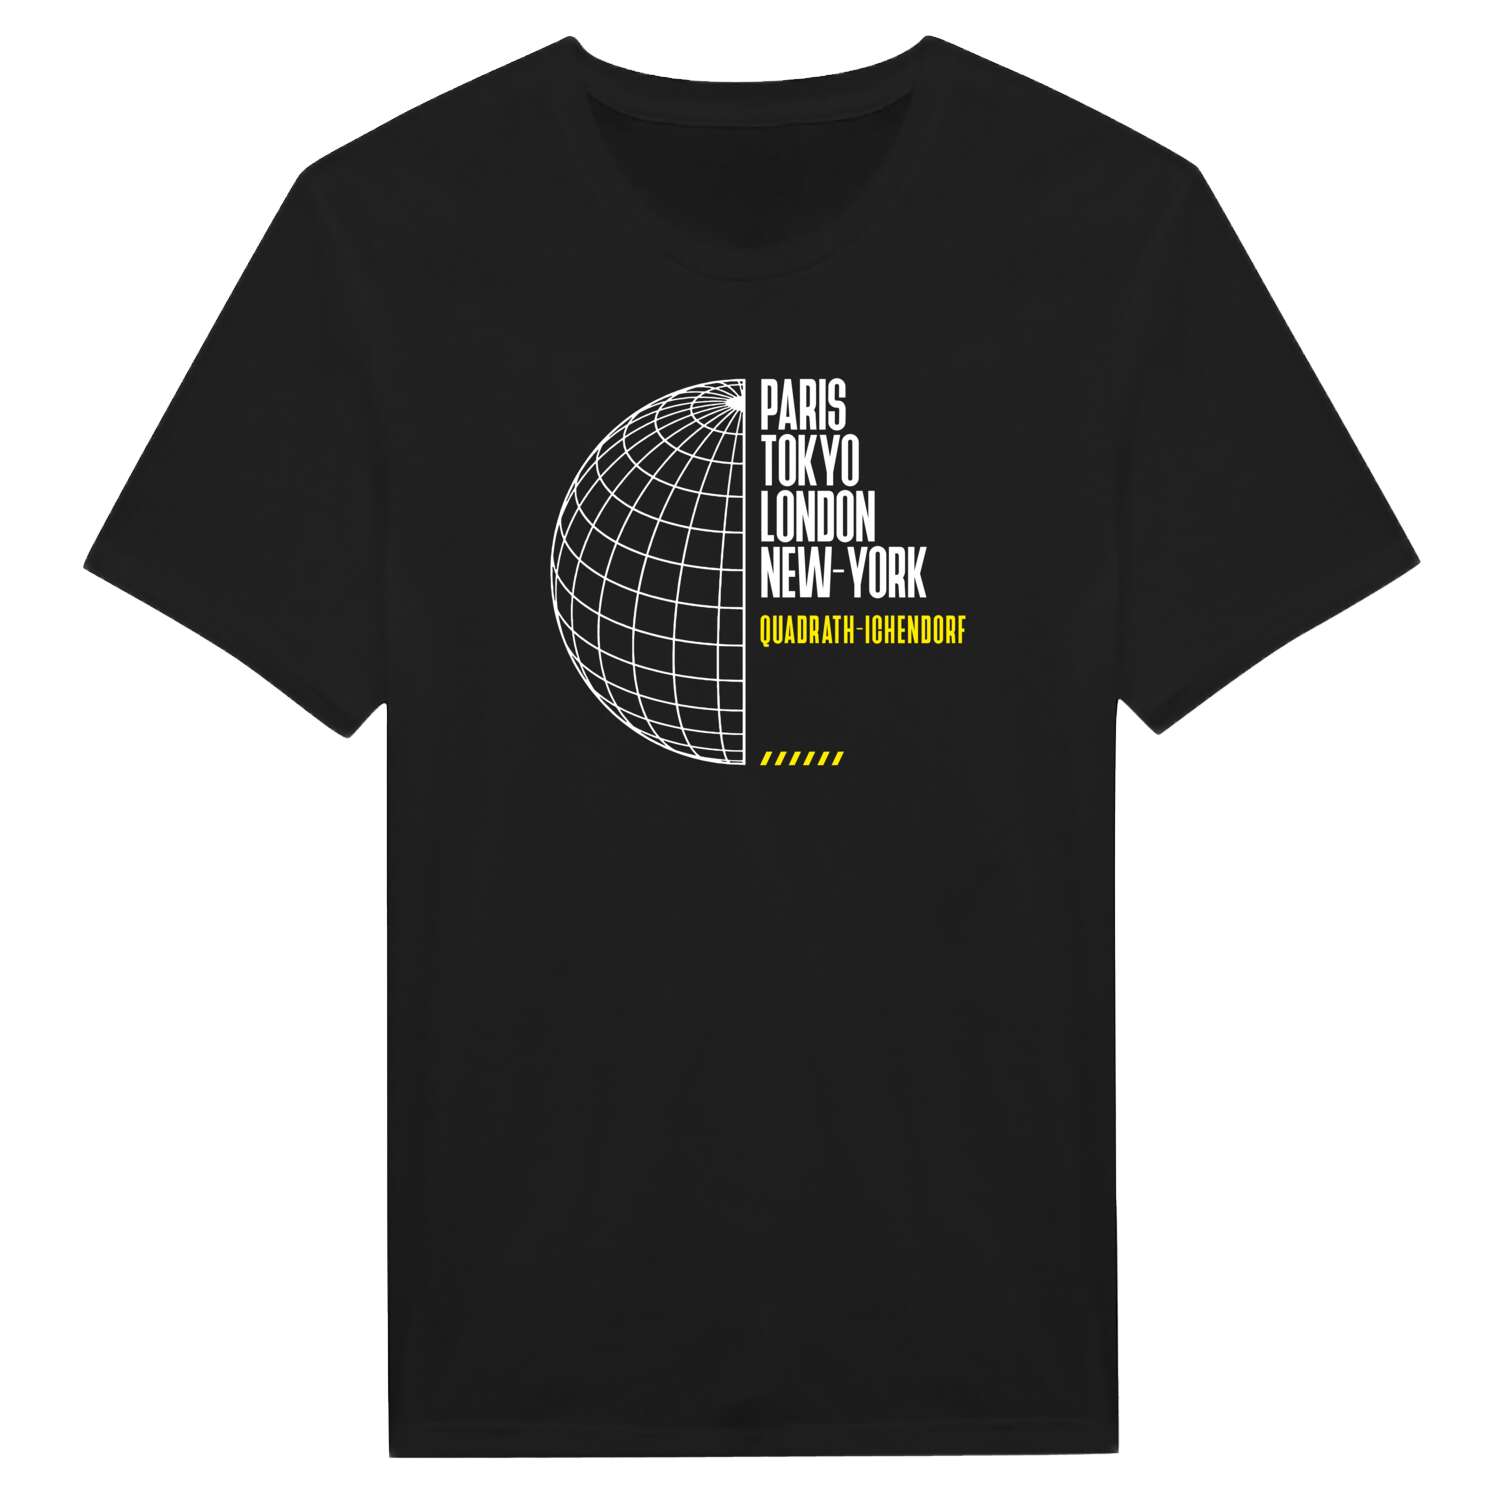 Quadrath-Ichendorf T-Shirt »Paris Tokyo London«